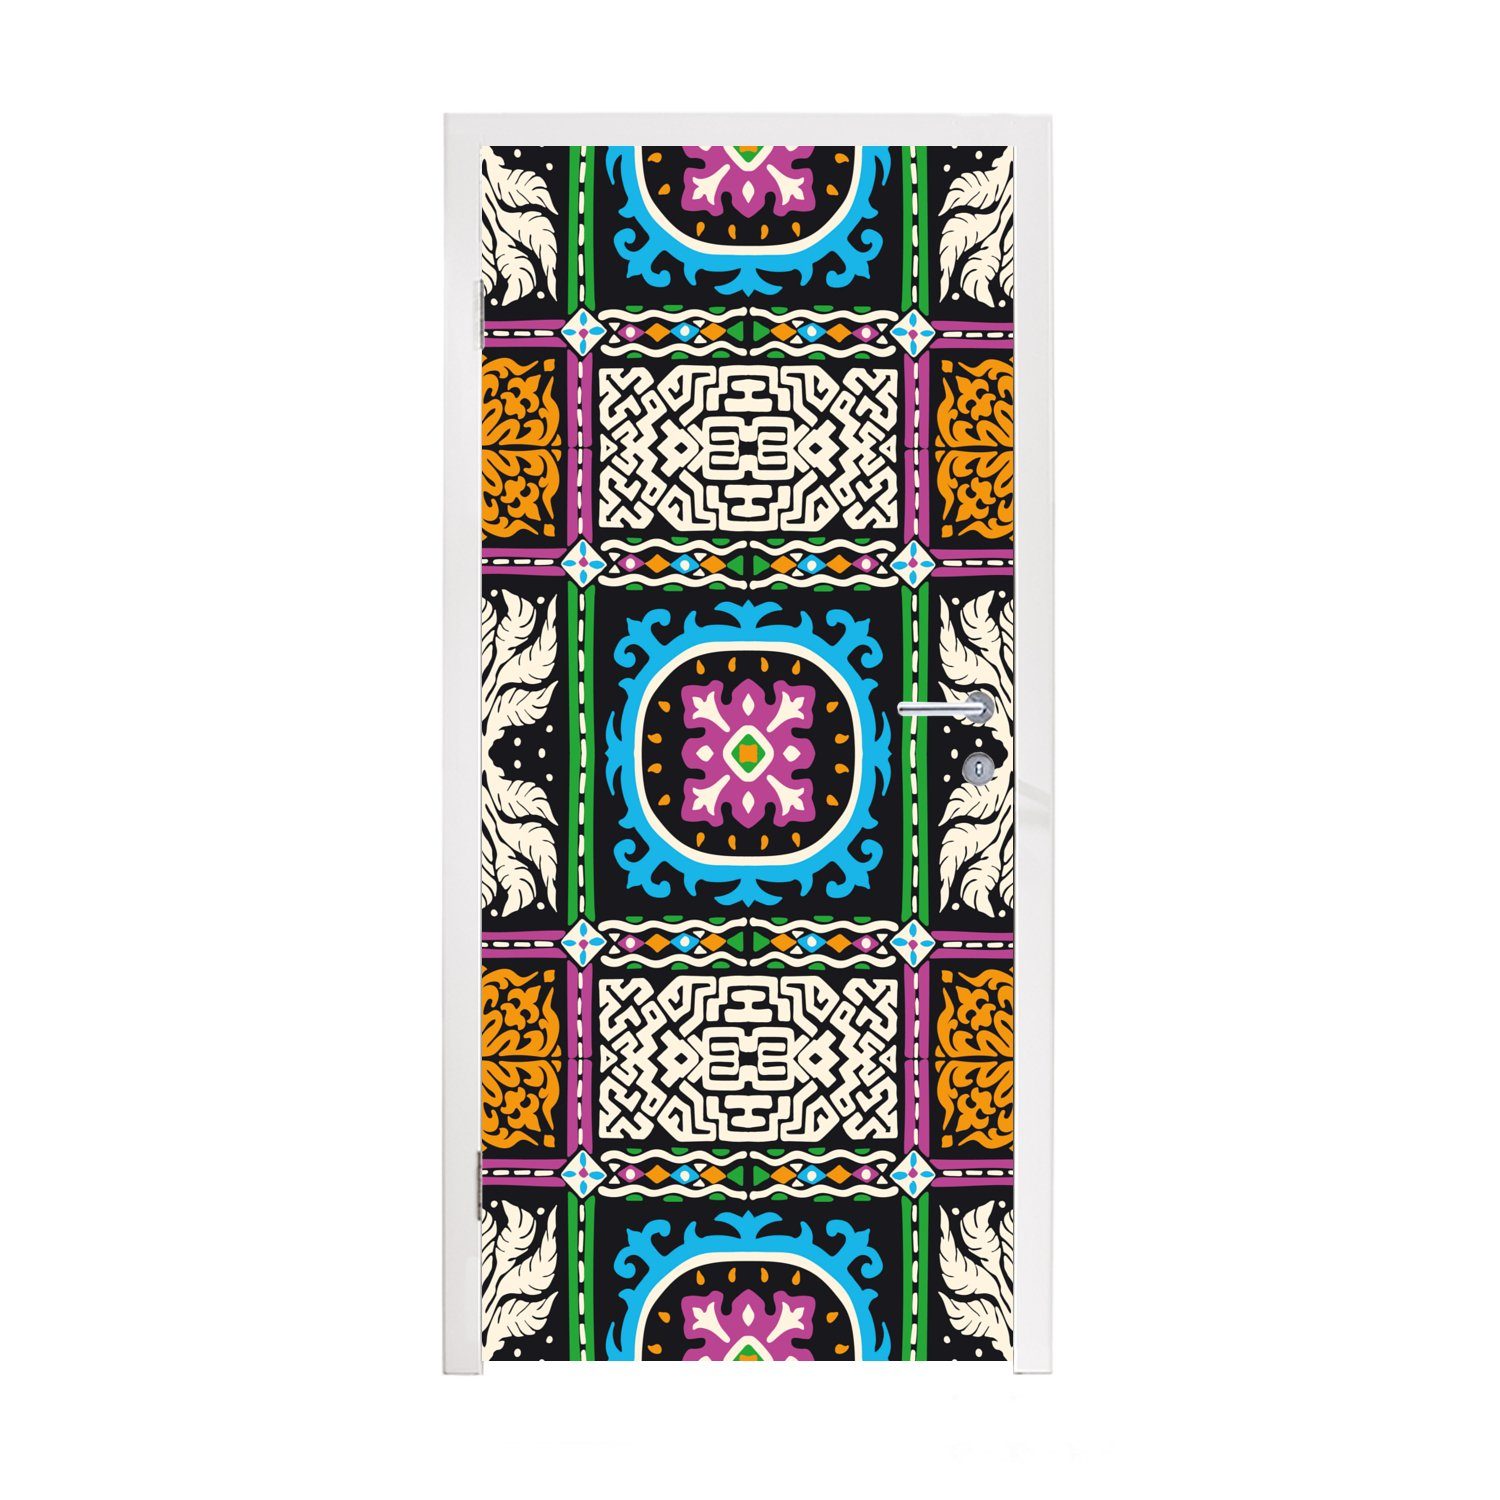 MuchoWow Türtapete Muster - Ornament - Abstrakt - Blau - Rosa, Matt, bedruckt, (1 St), Fototapete für Tür, Türaufkleber, 75x205 cm | Türtapeten